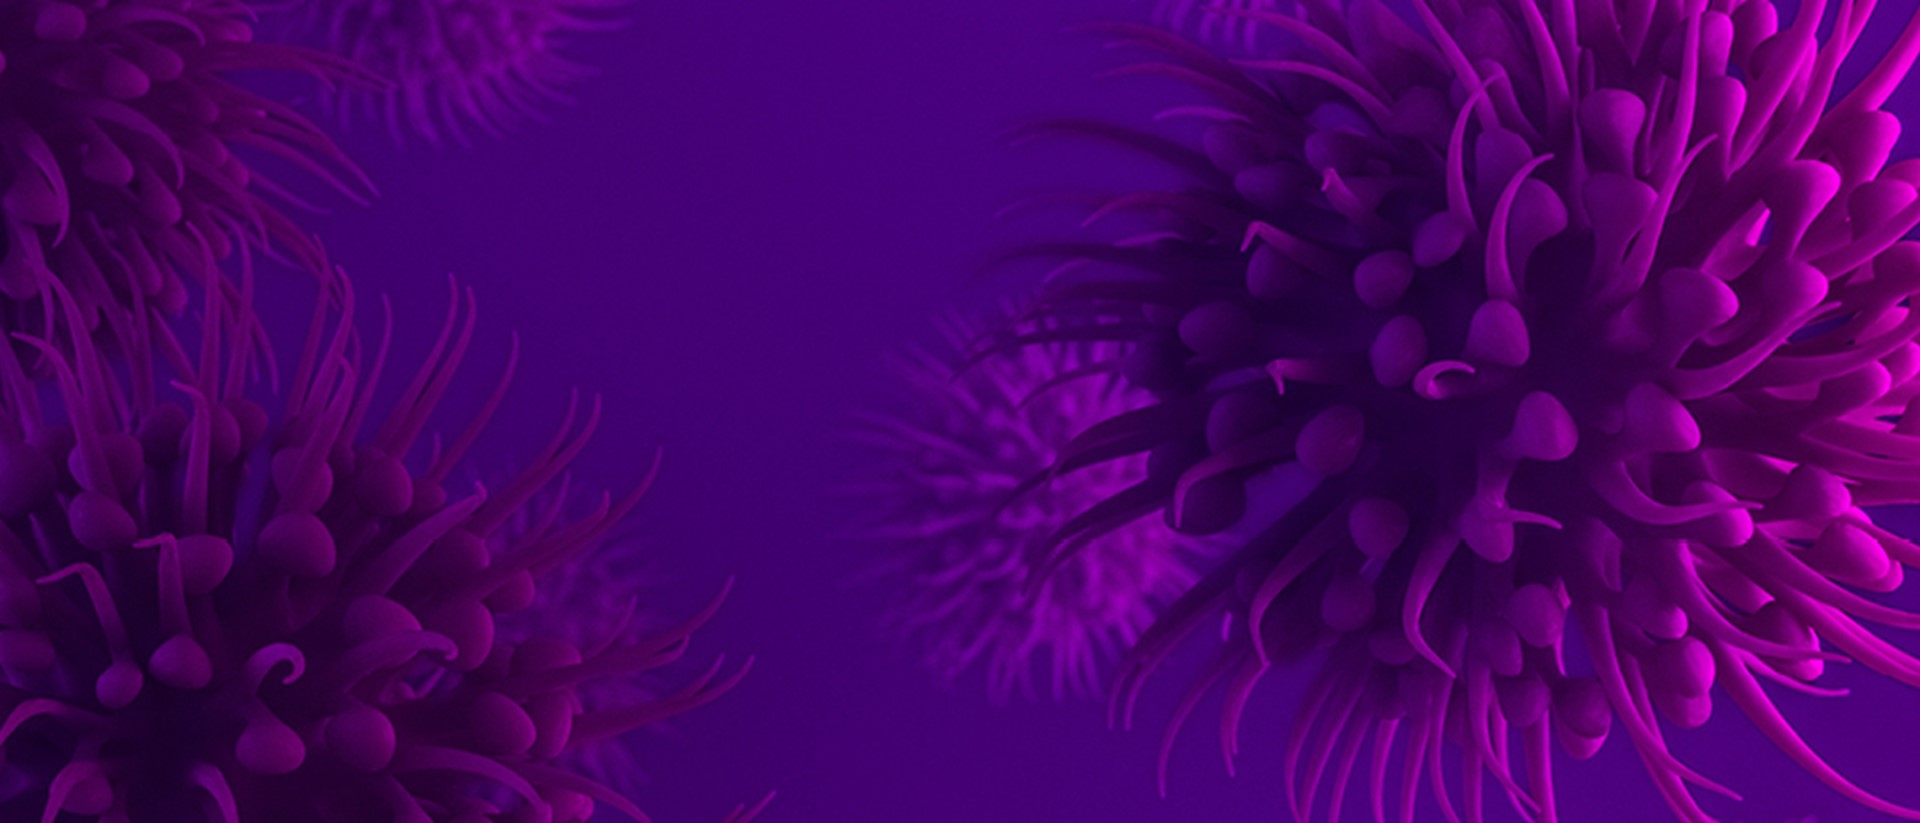 Image of a purple virus on a dark purple background